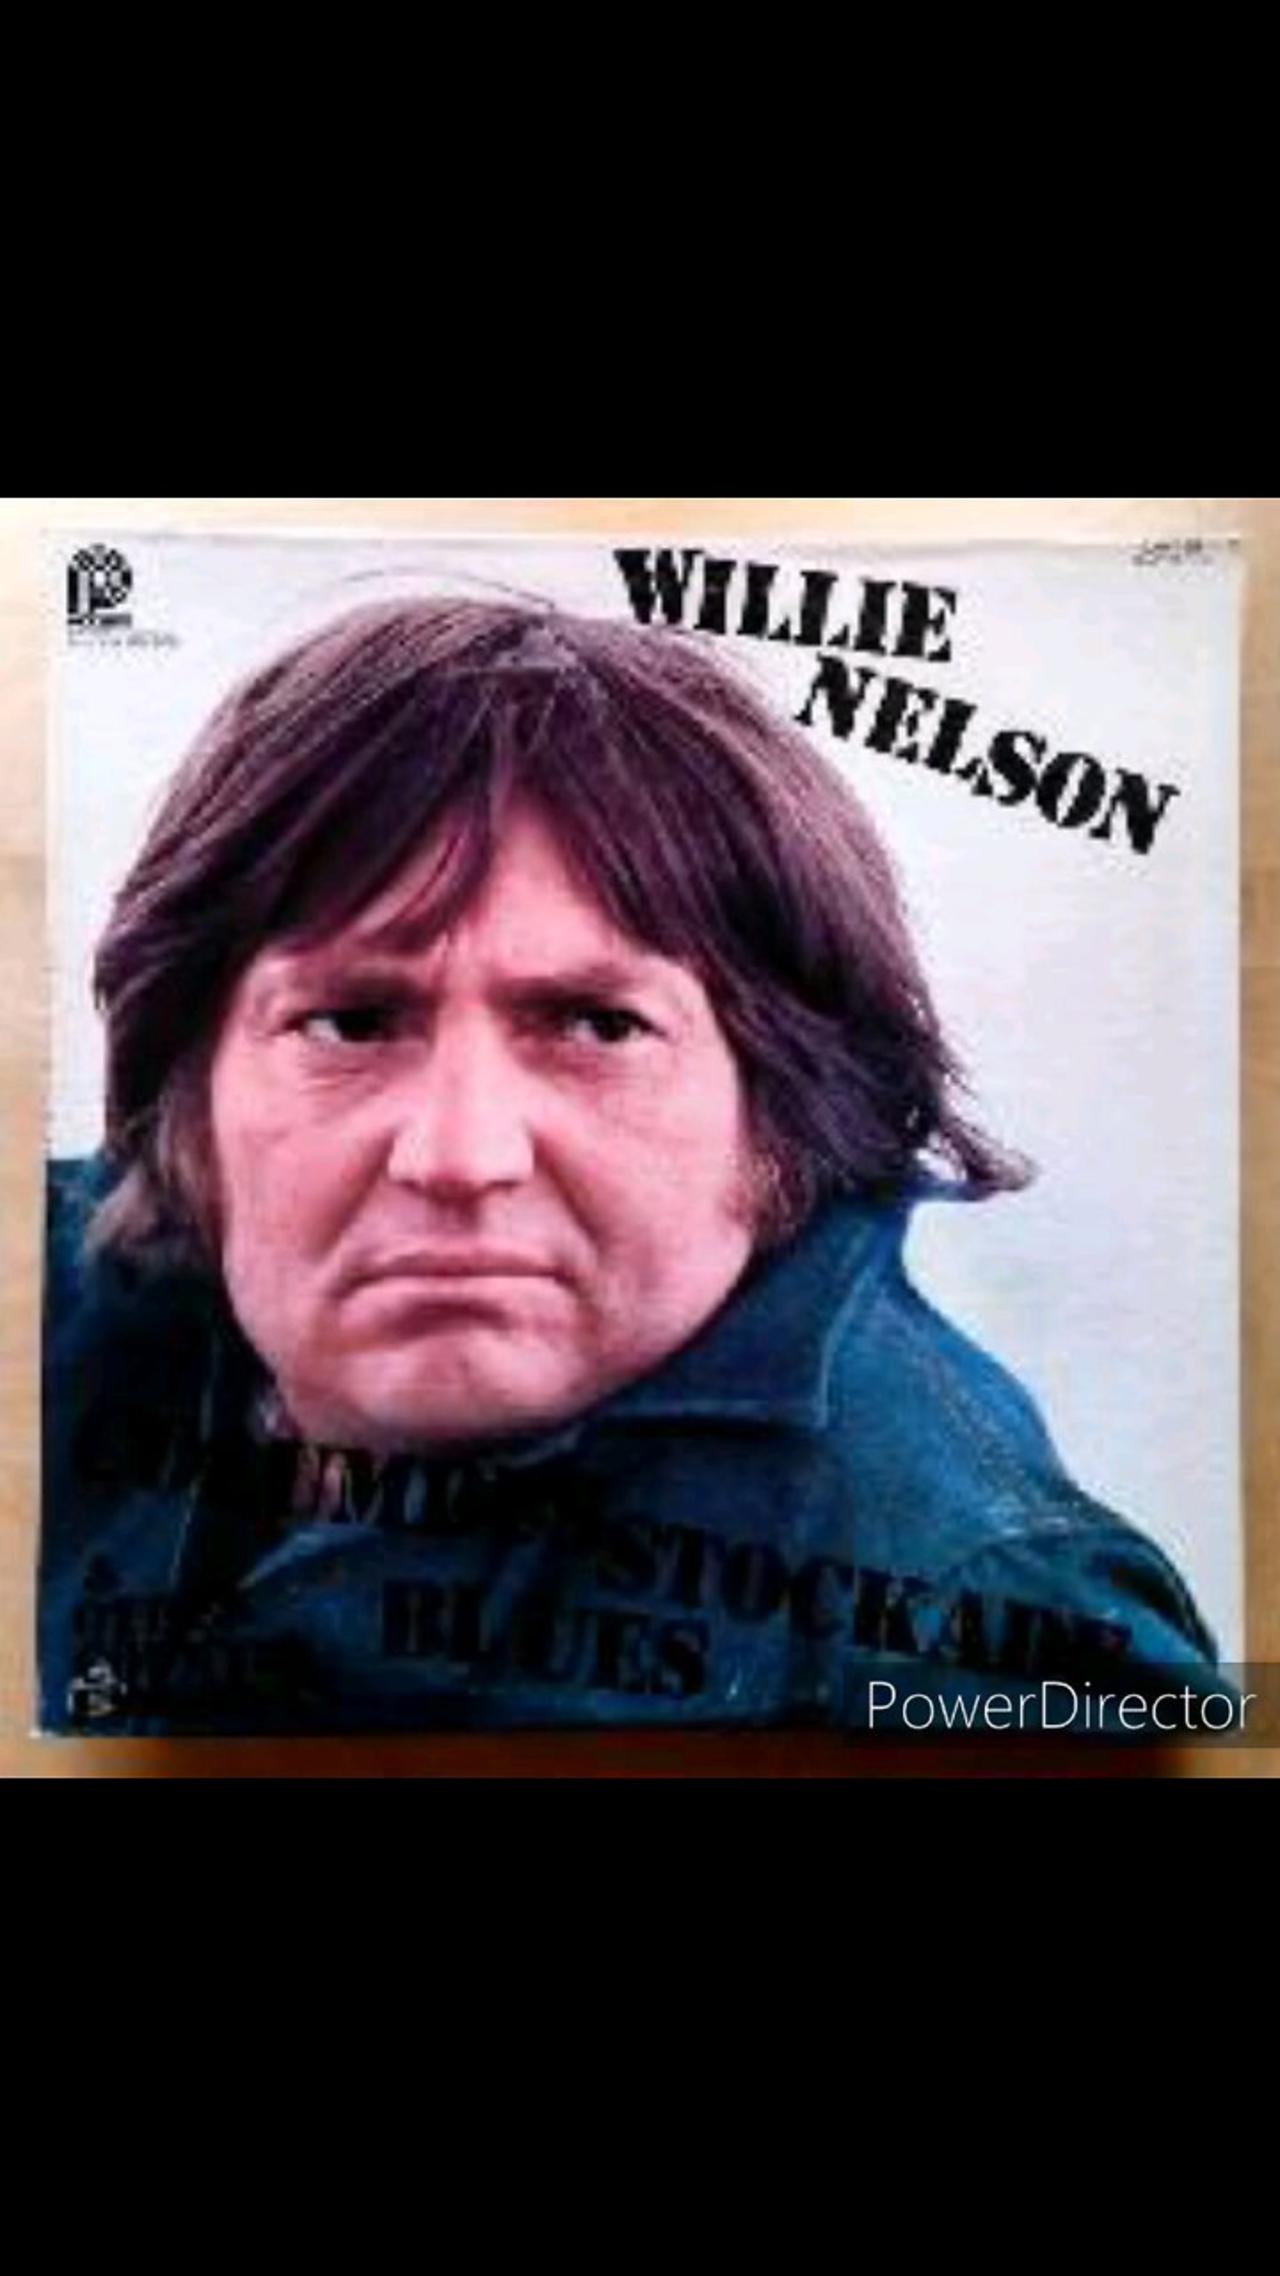 Willie Nelson - Devil In A Sleepin' Bag